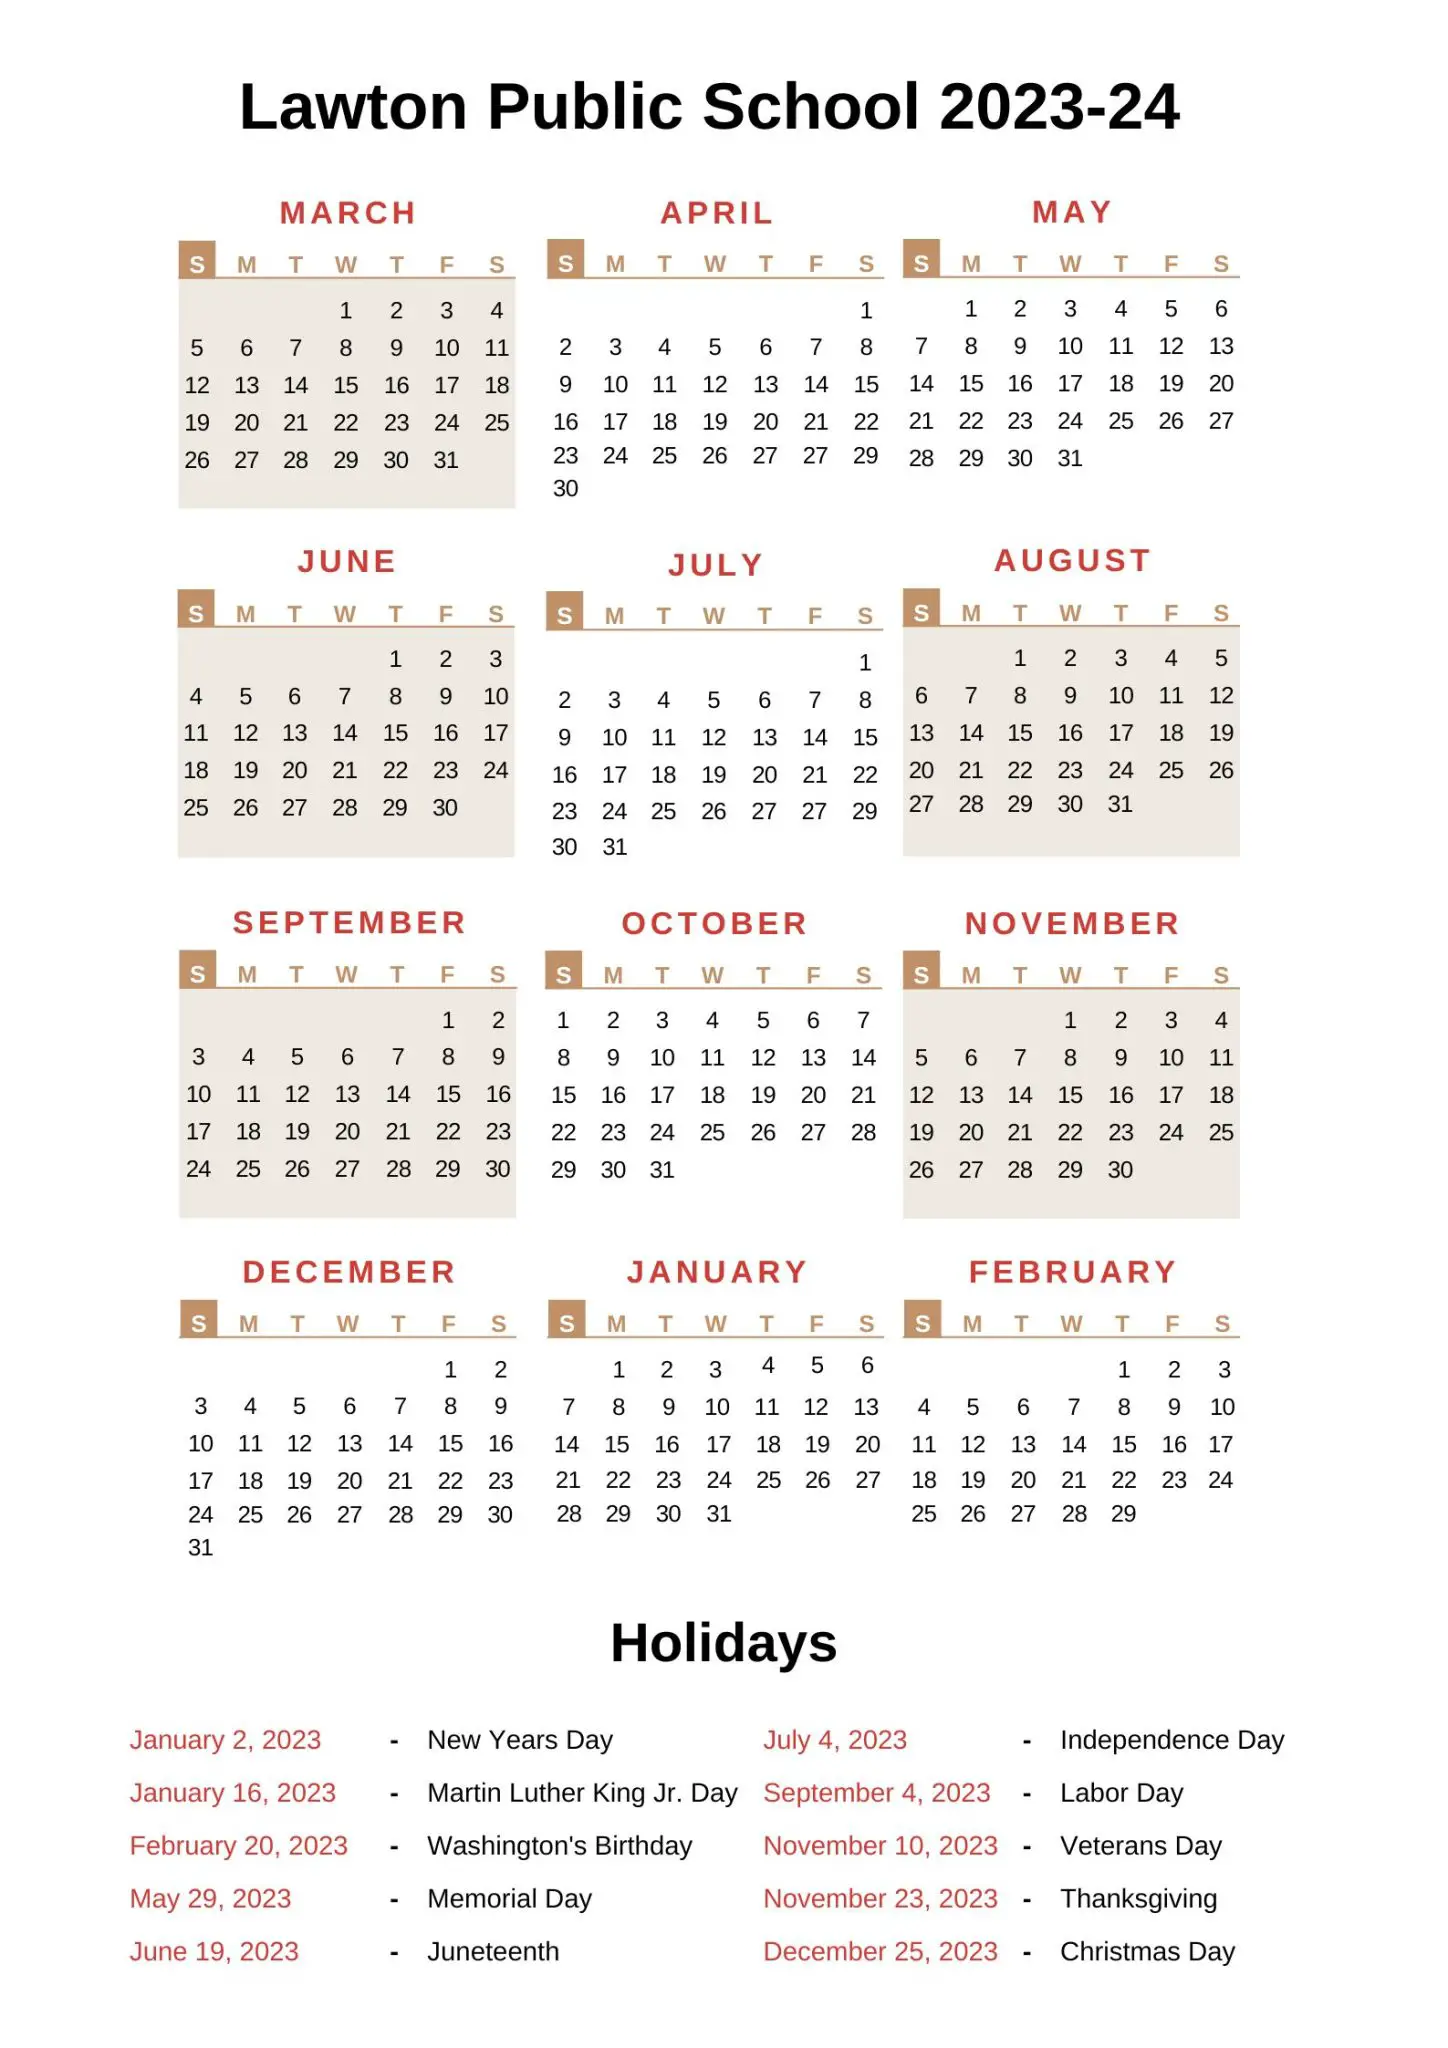 Lawton Public Schools Calendar 2023 24 With Holidays